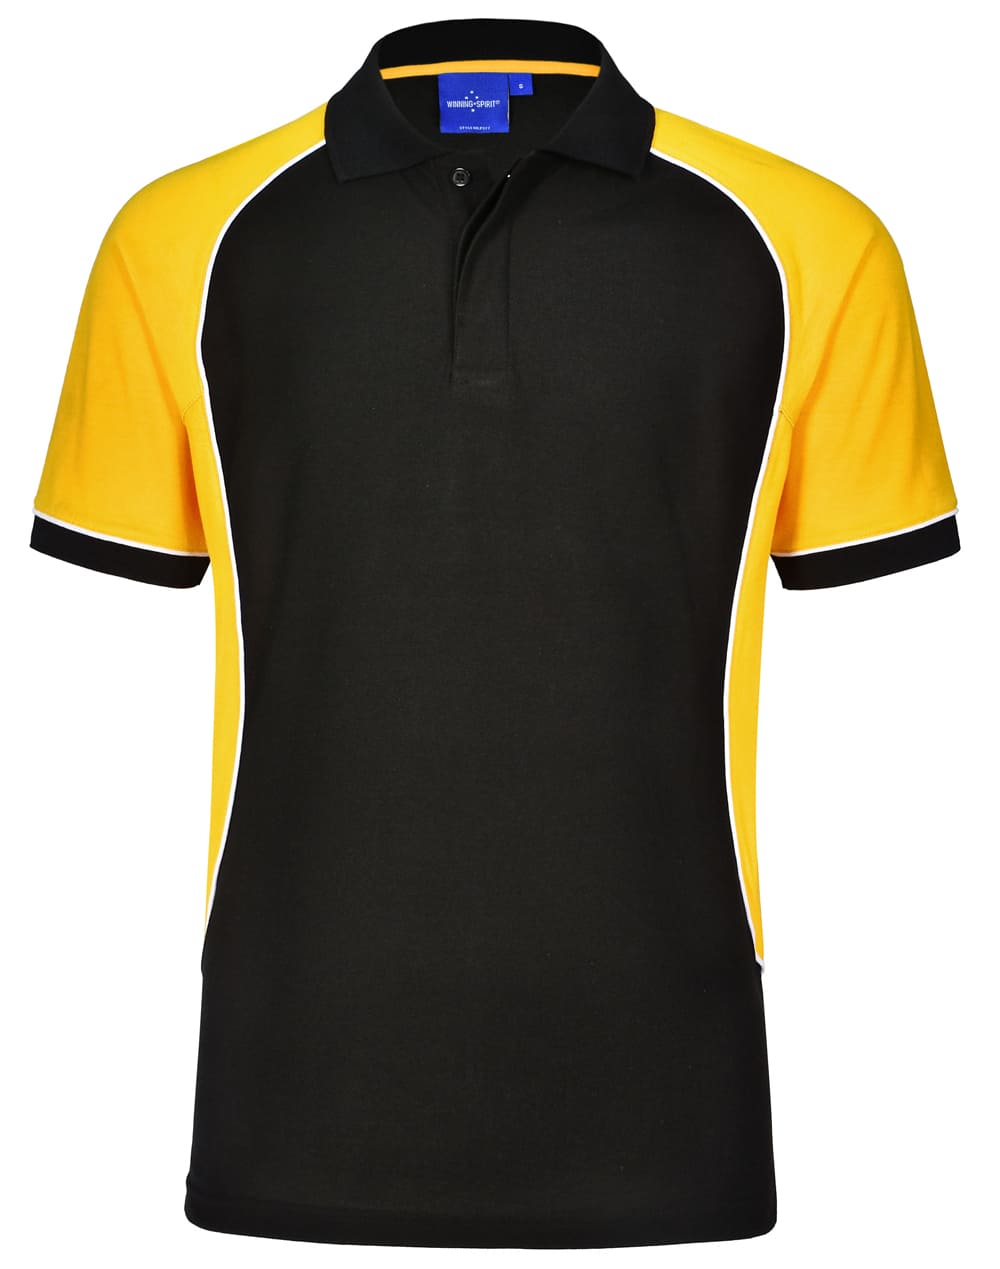 Custom Printed Mens Arena (Black, White, Green) Tri-Color Polo T-Shirts Online Australia